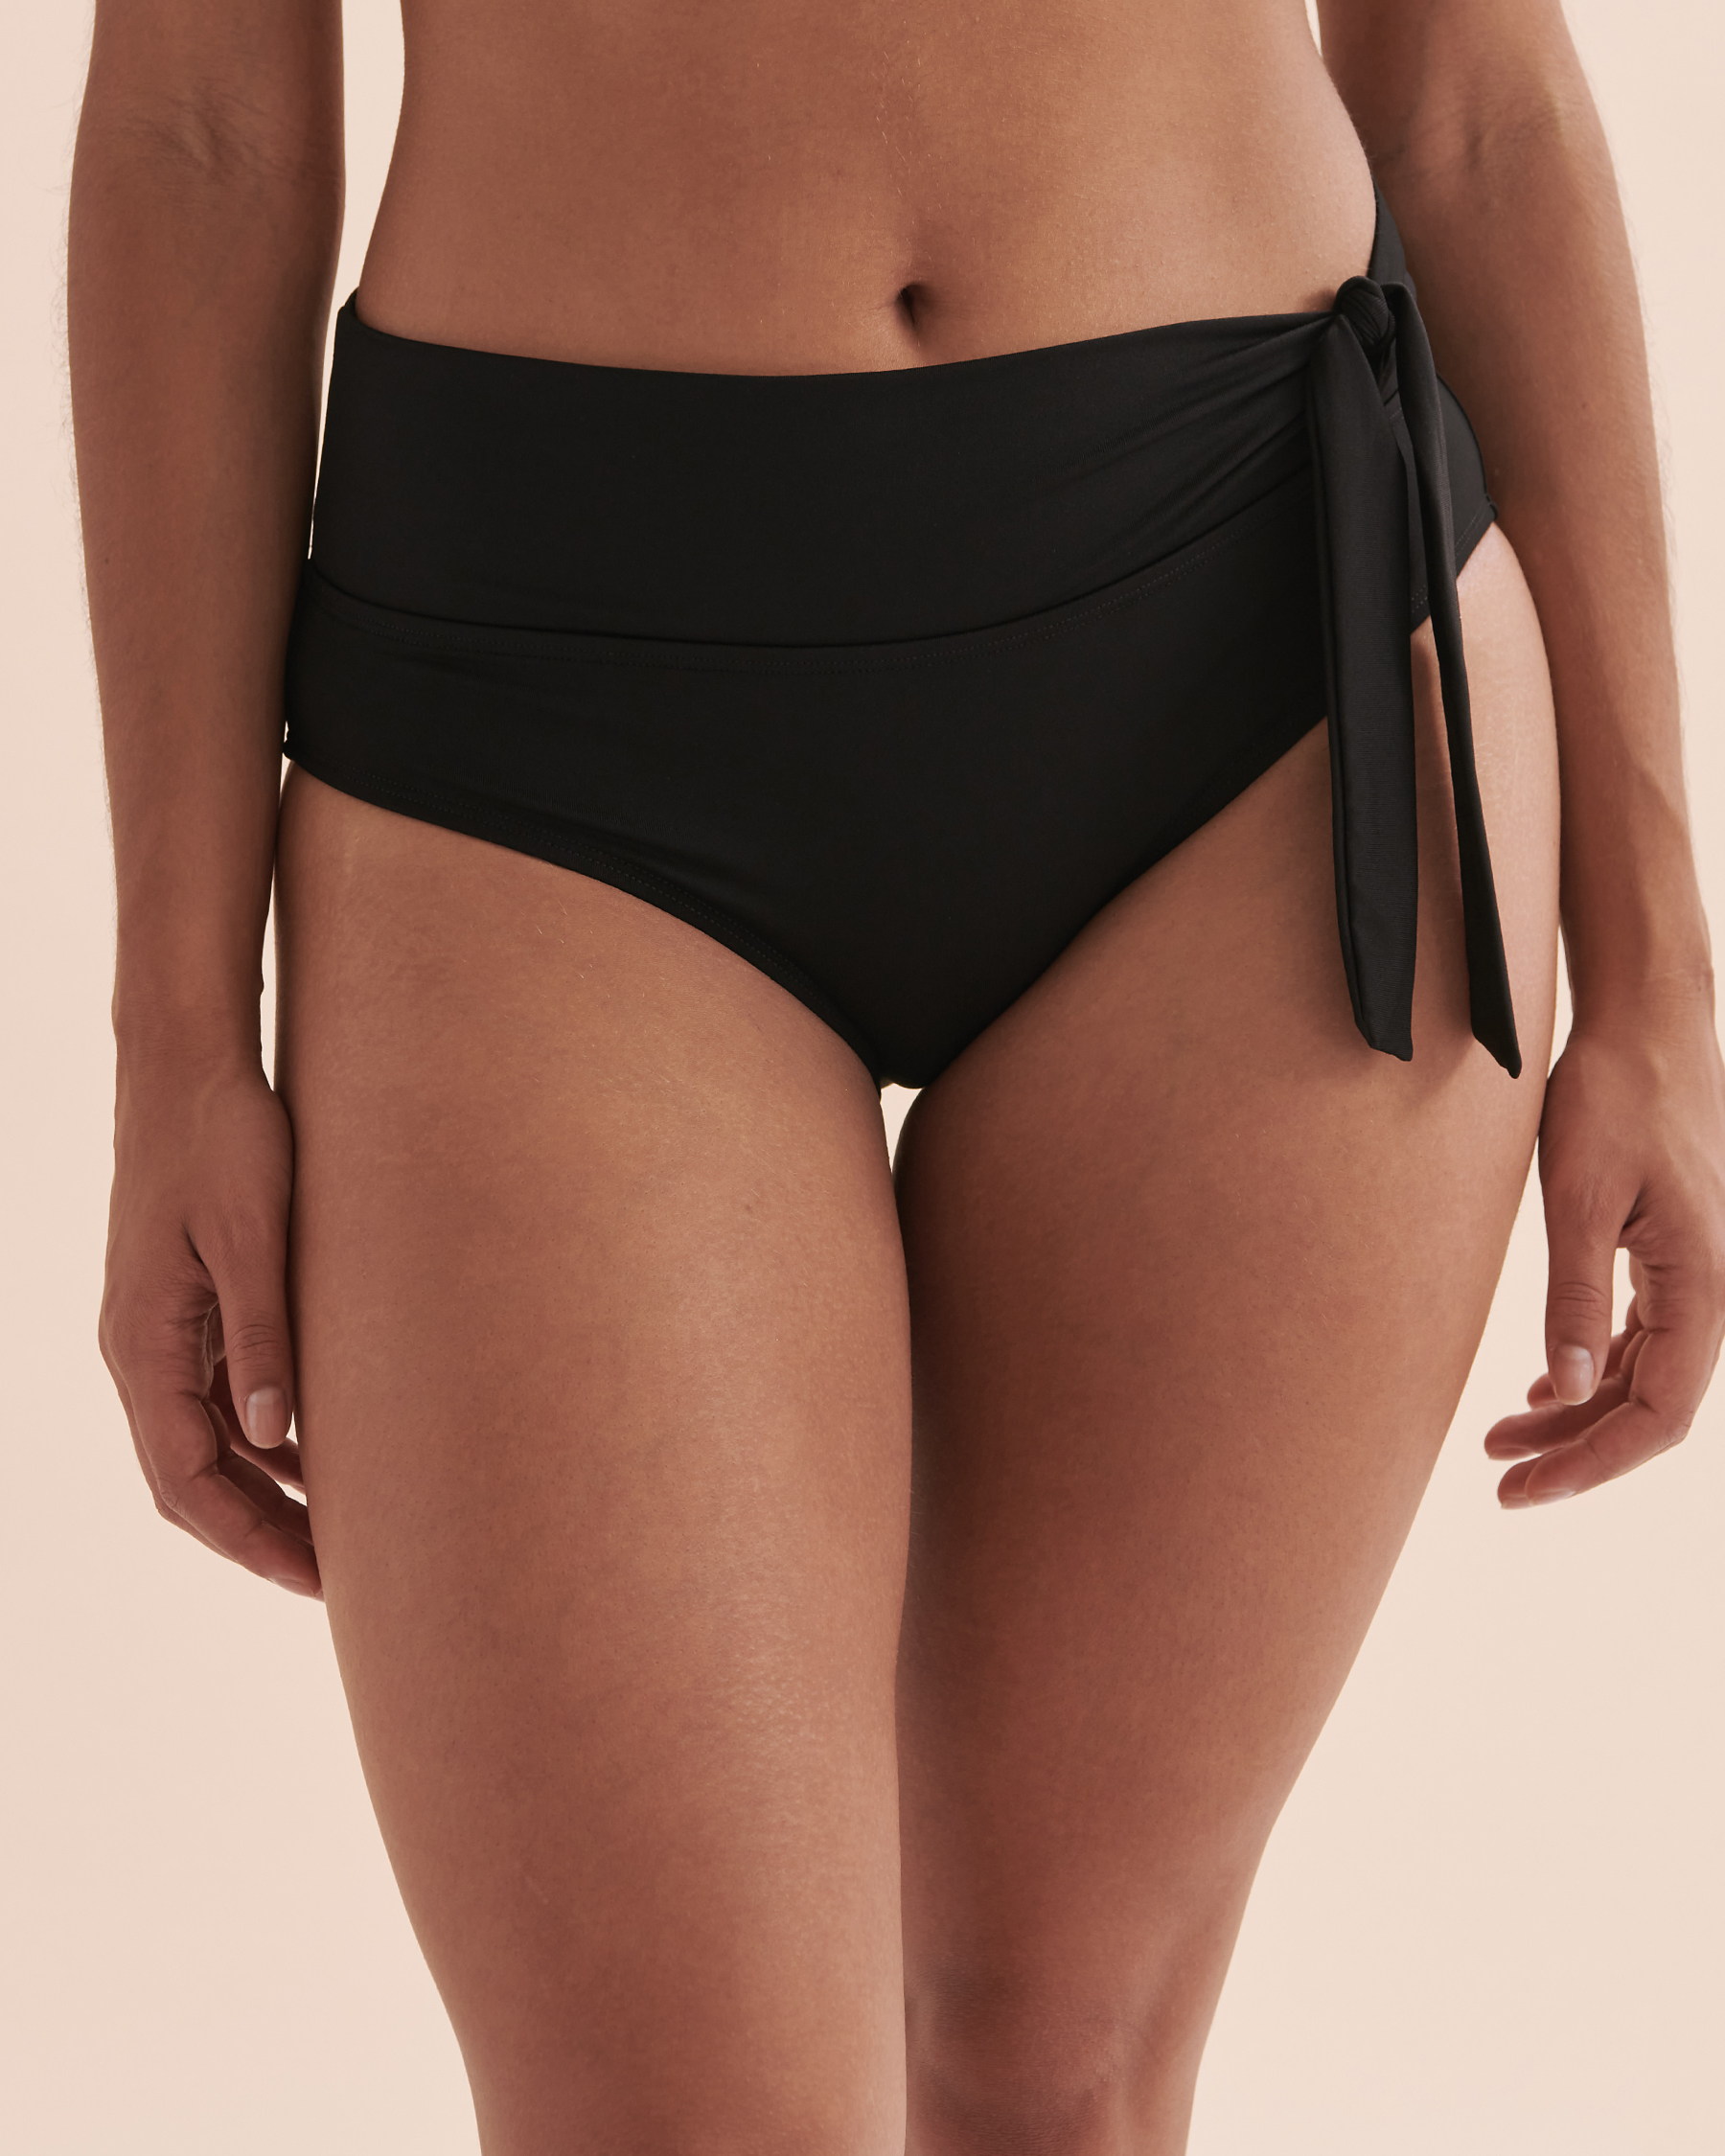 TURQUOISE COUTURE Solid Folded Waistband Bikini Bottom Black 01300241 - View4